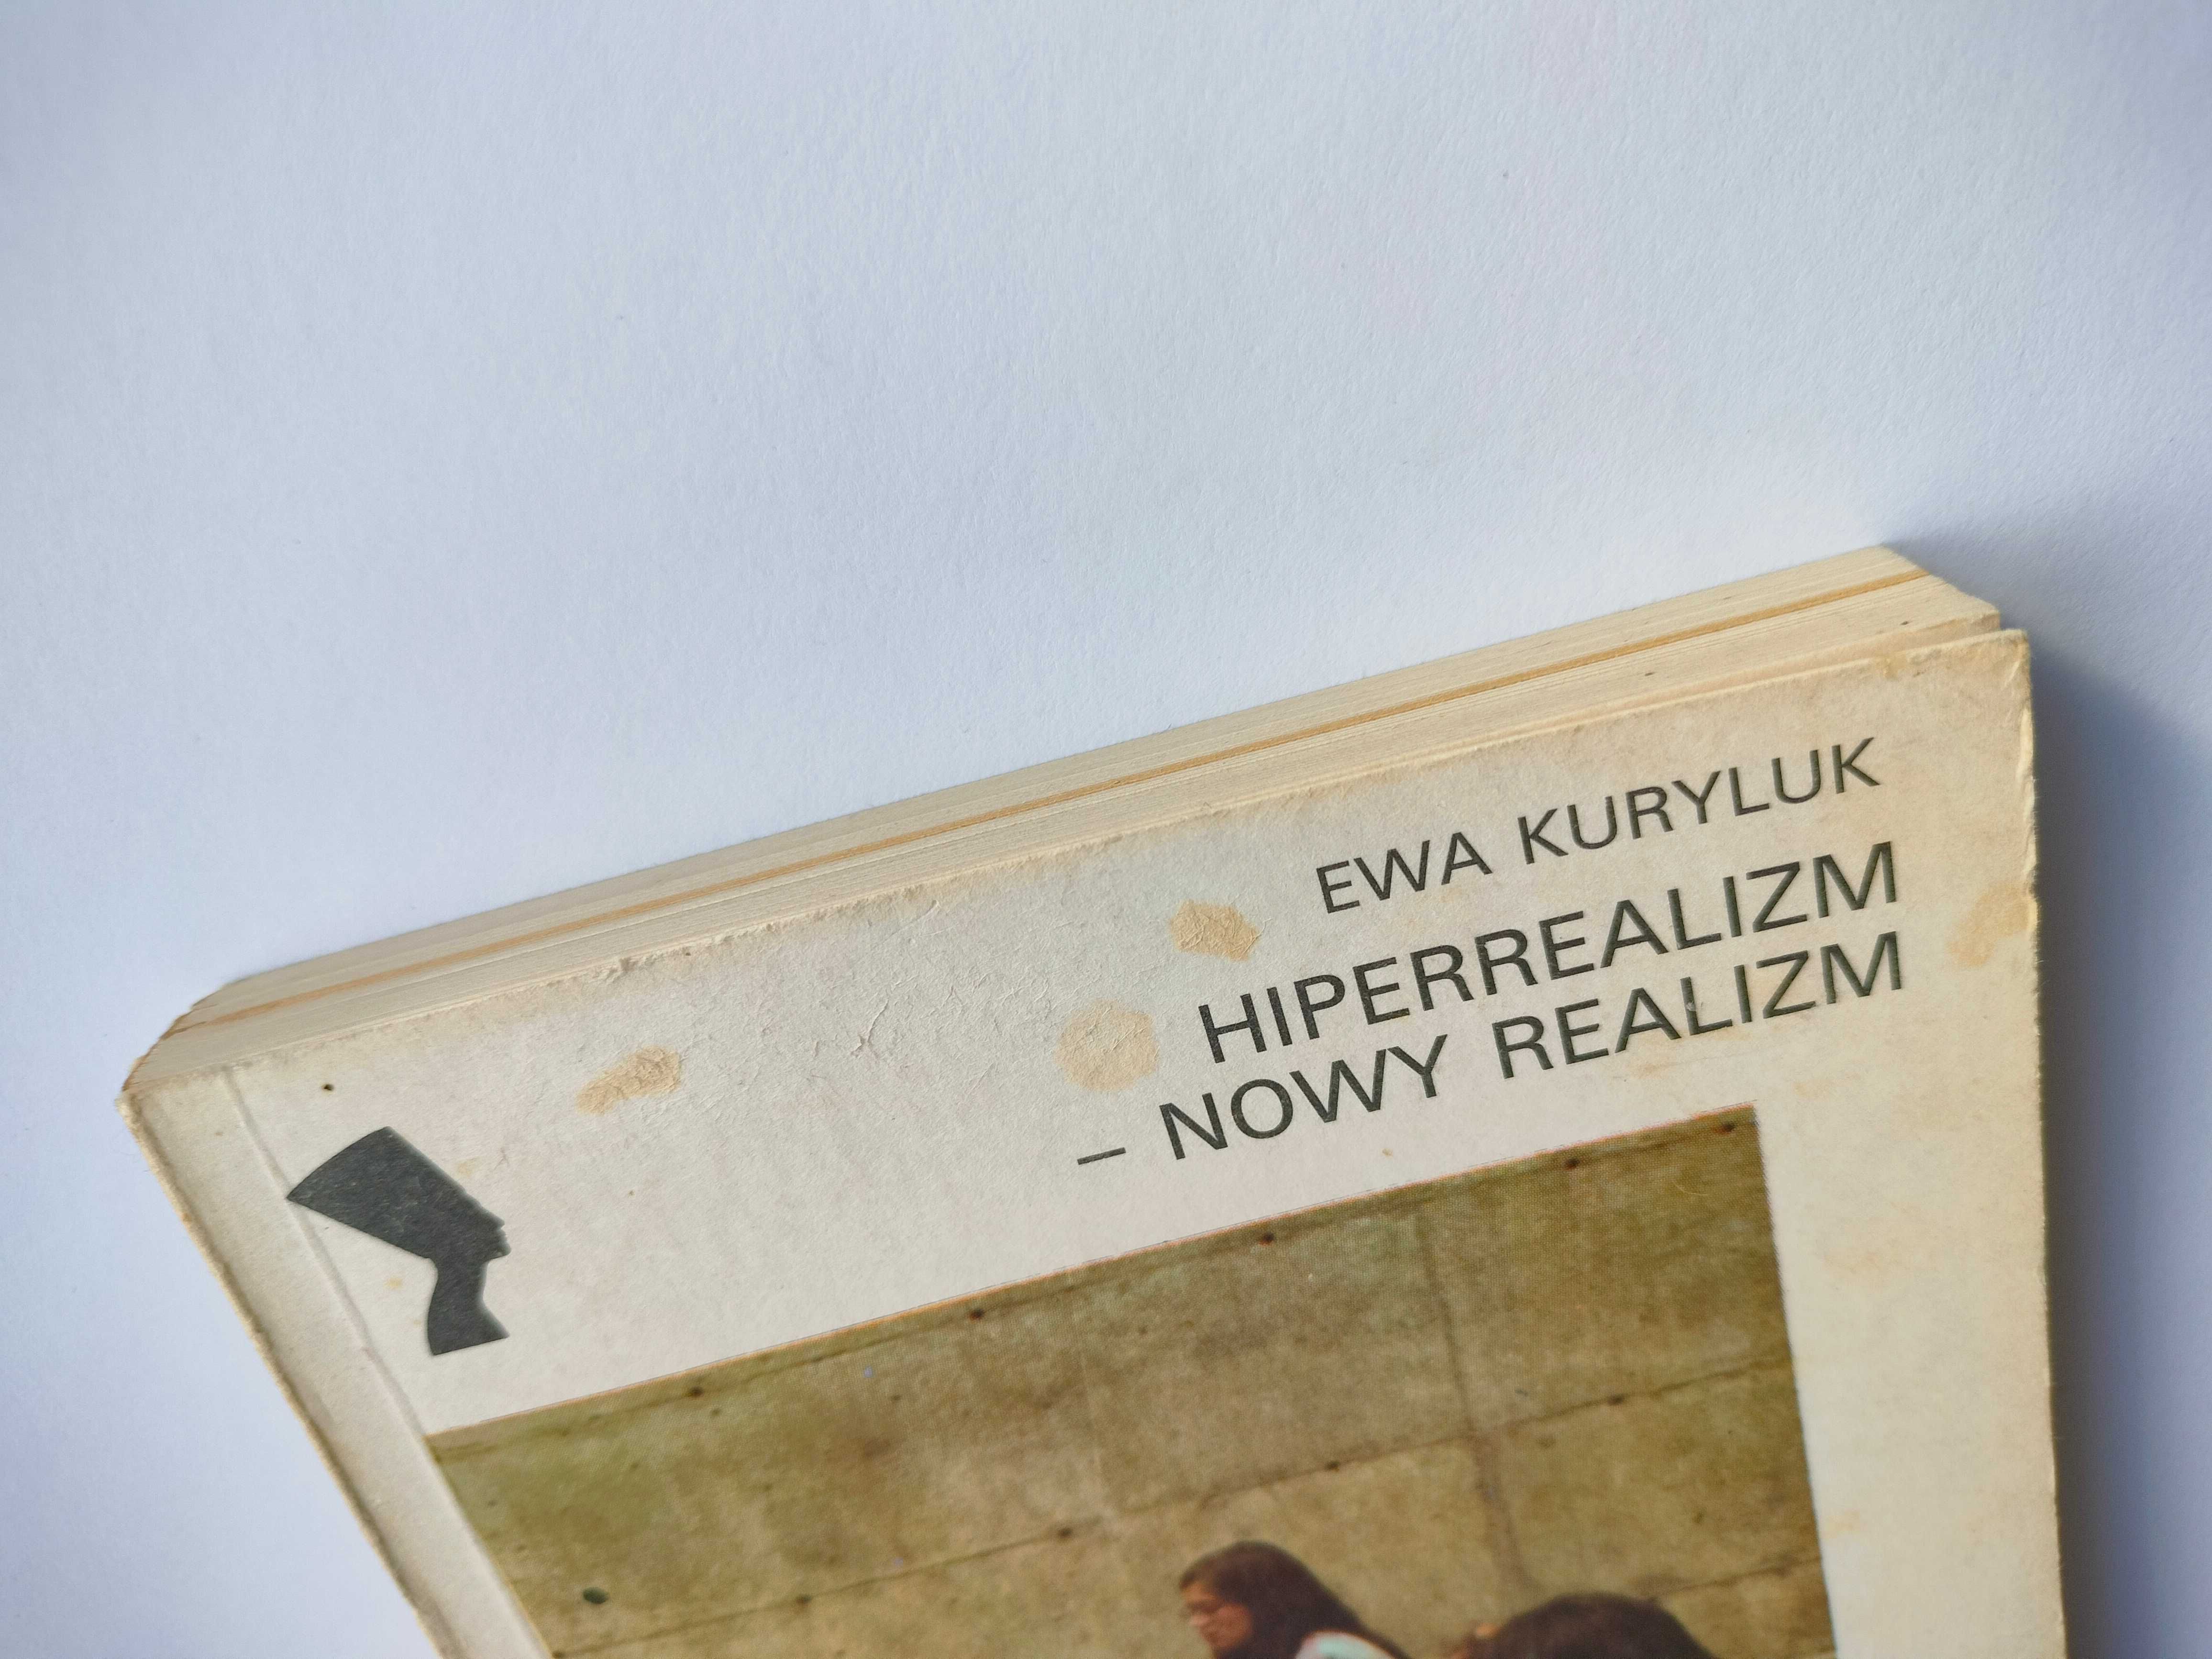 "Hiperrealizm - nowy realizm" Ewa Kuryluk